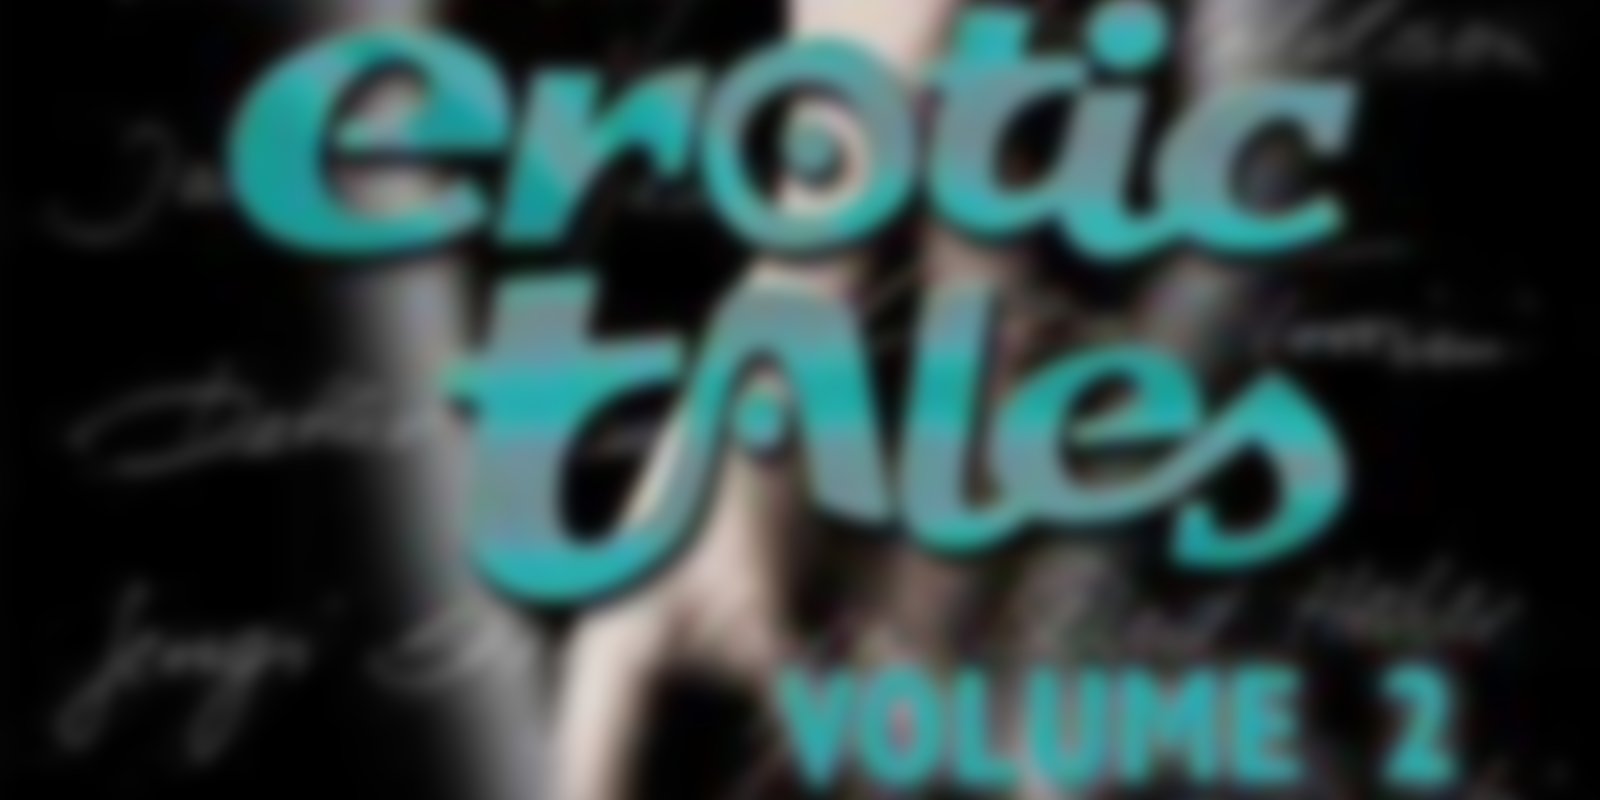 Erotic Tales - Volume 2